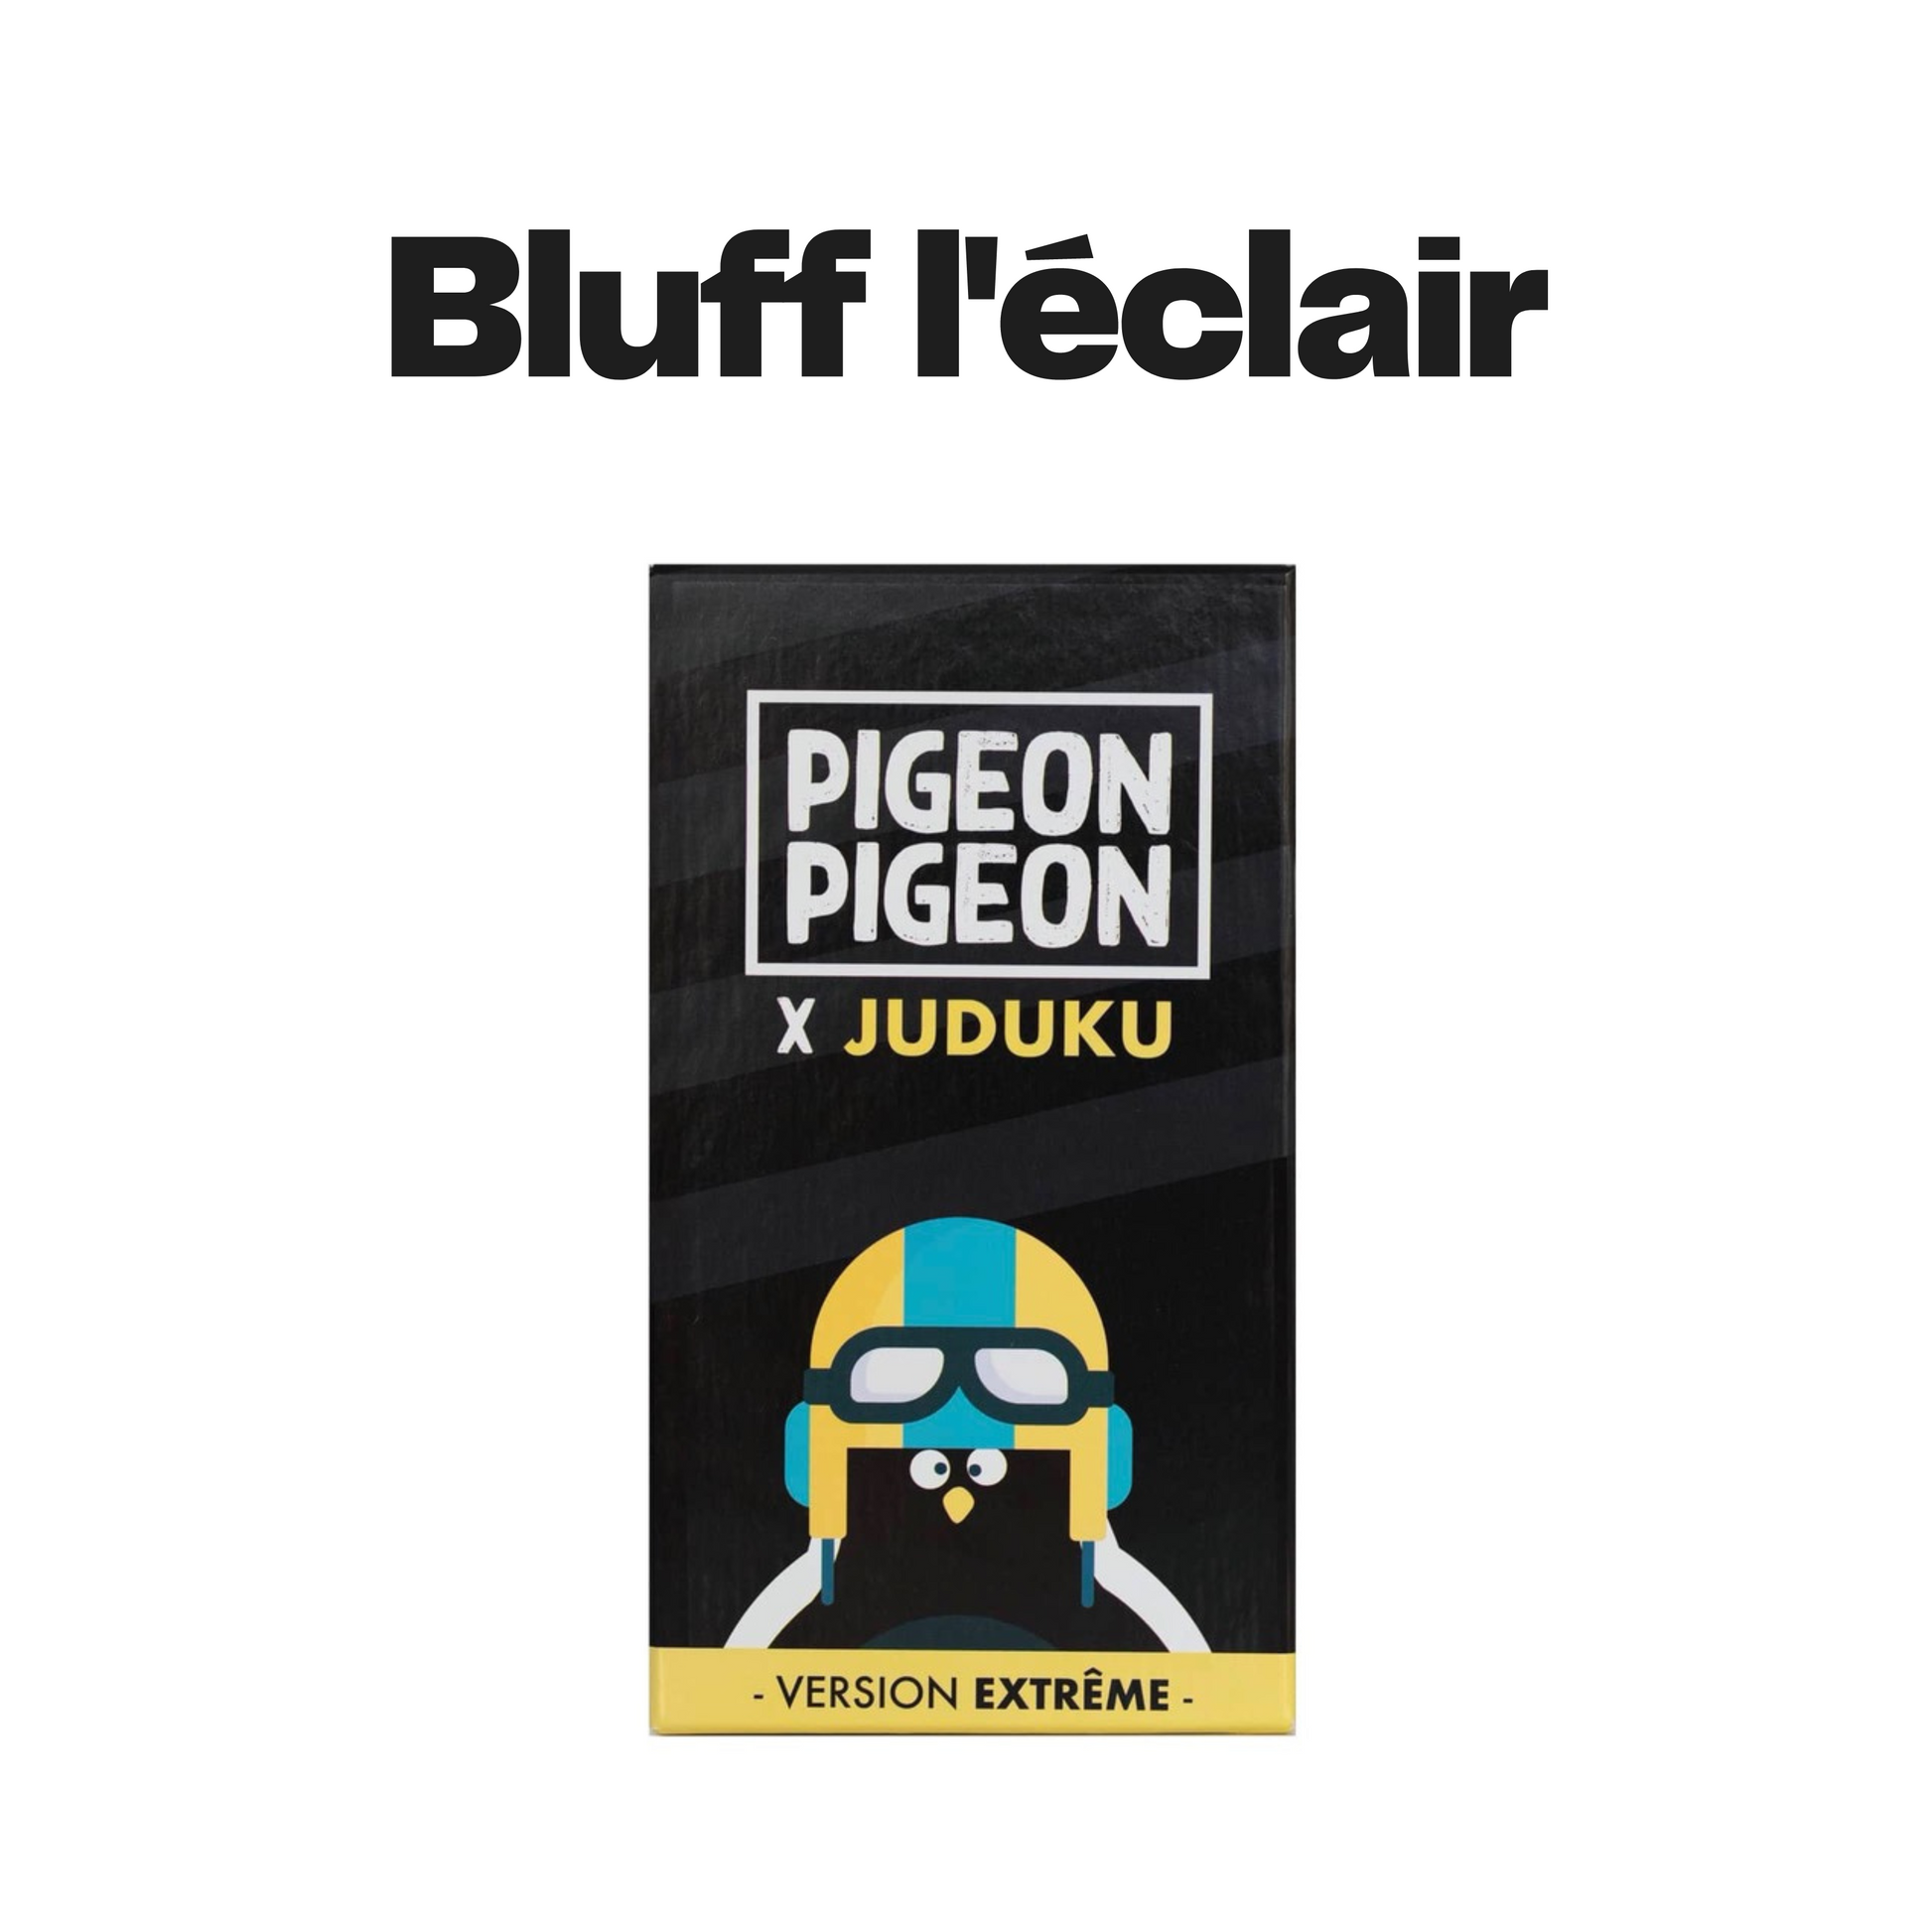 Pigeon Pigeon - edition Napoleon - Jeux d'ambiance